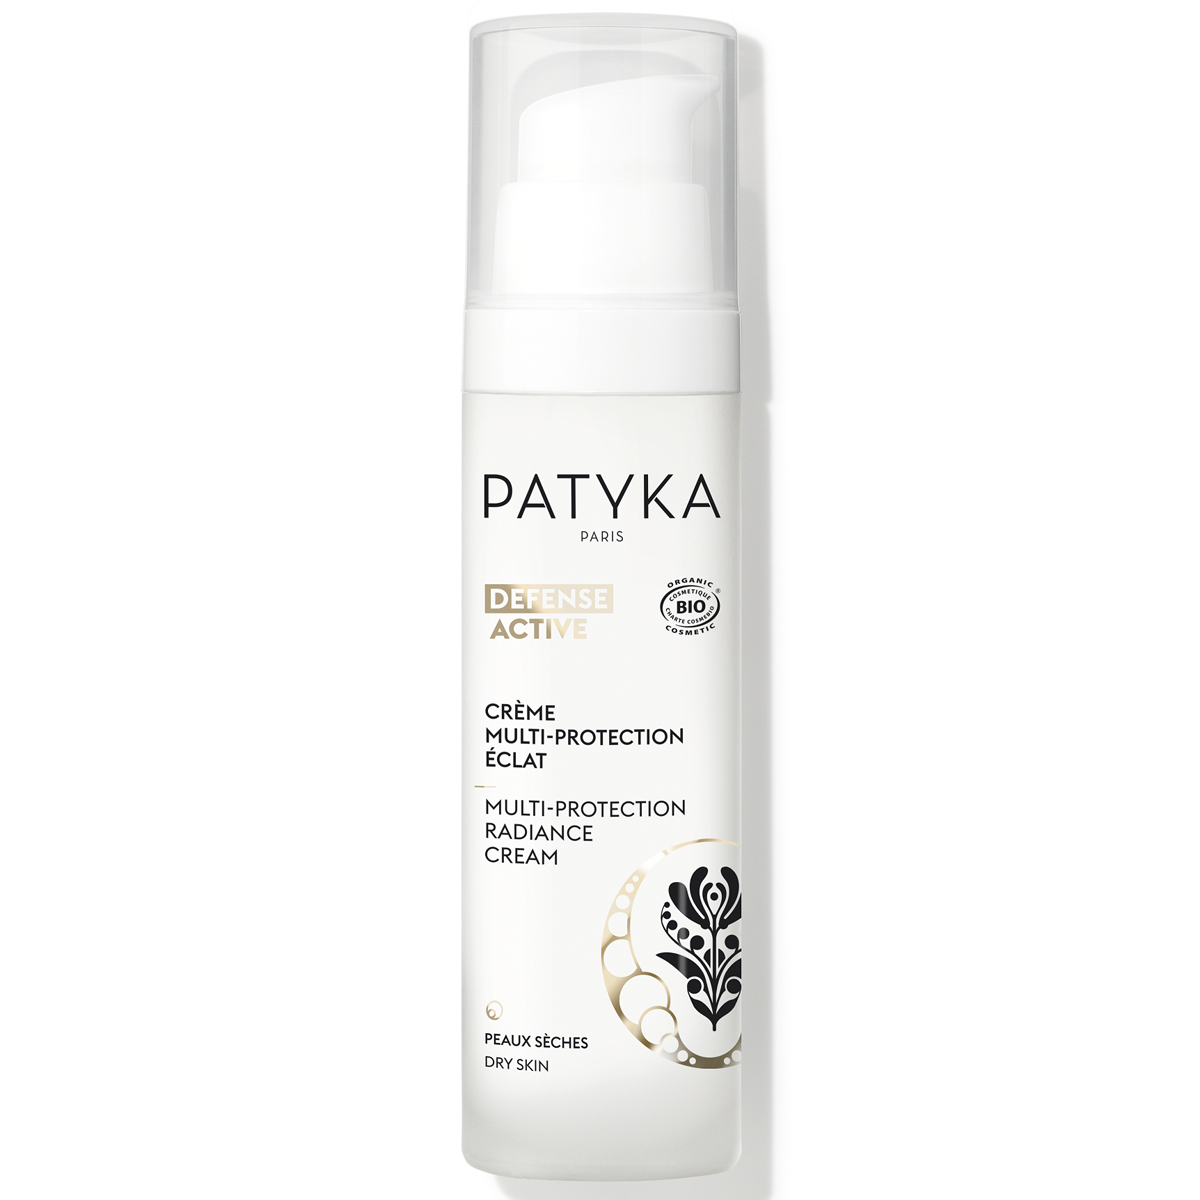 Patyka Крем для сухой кожи лица Multi-Protection Radiance Cream, 50 мл (Patyka, Defense Active)